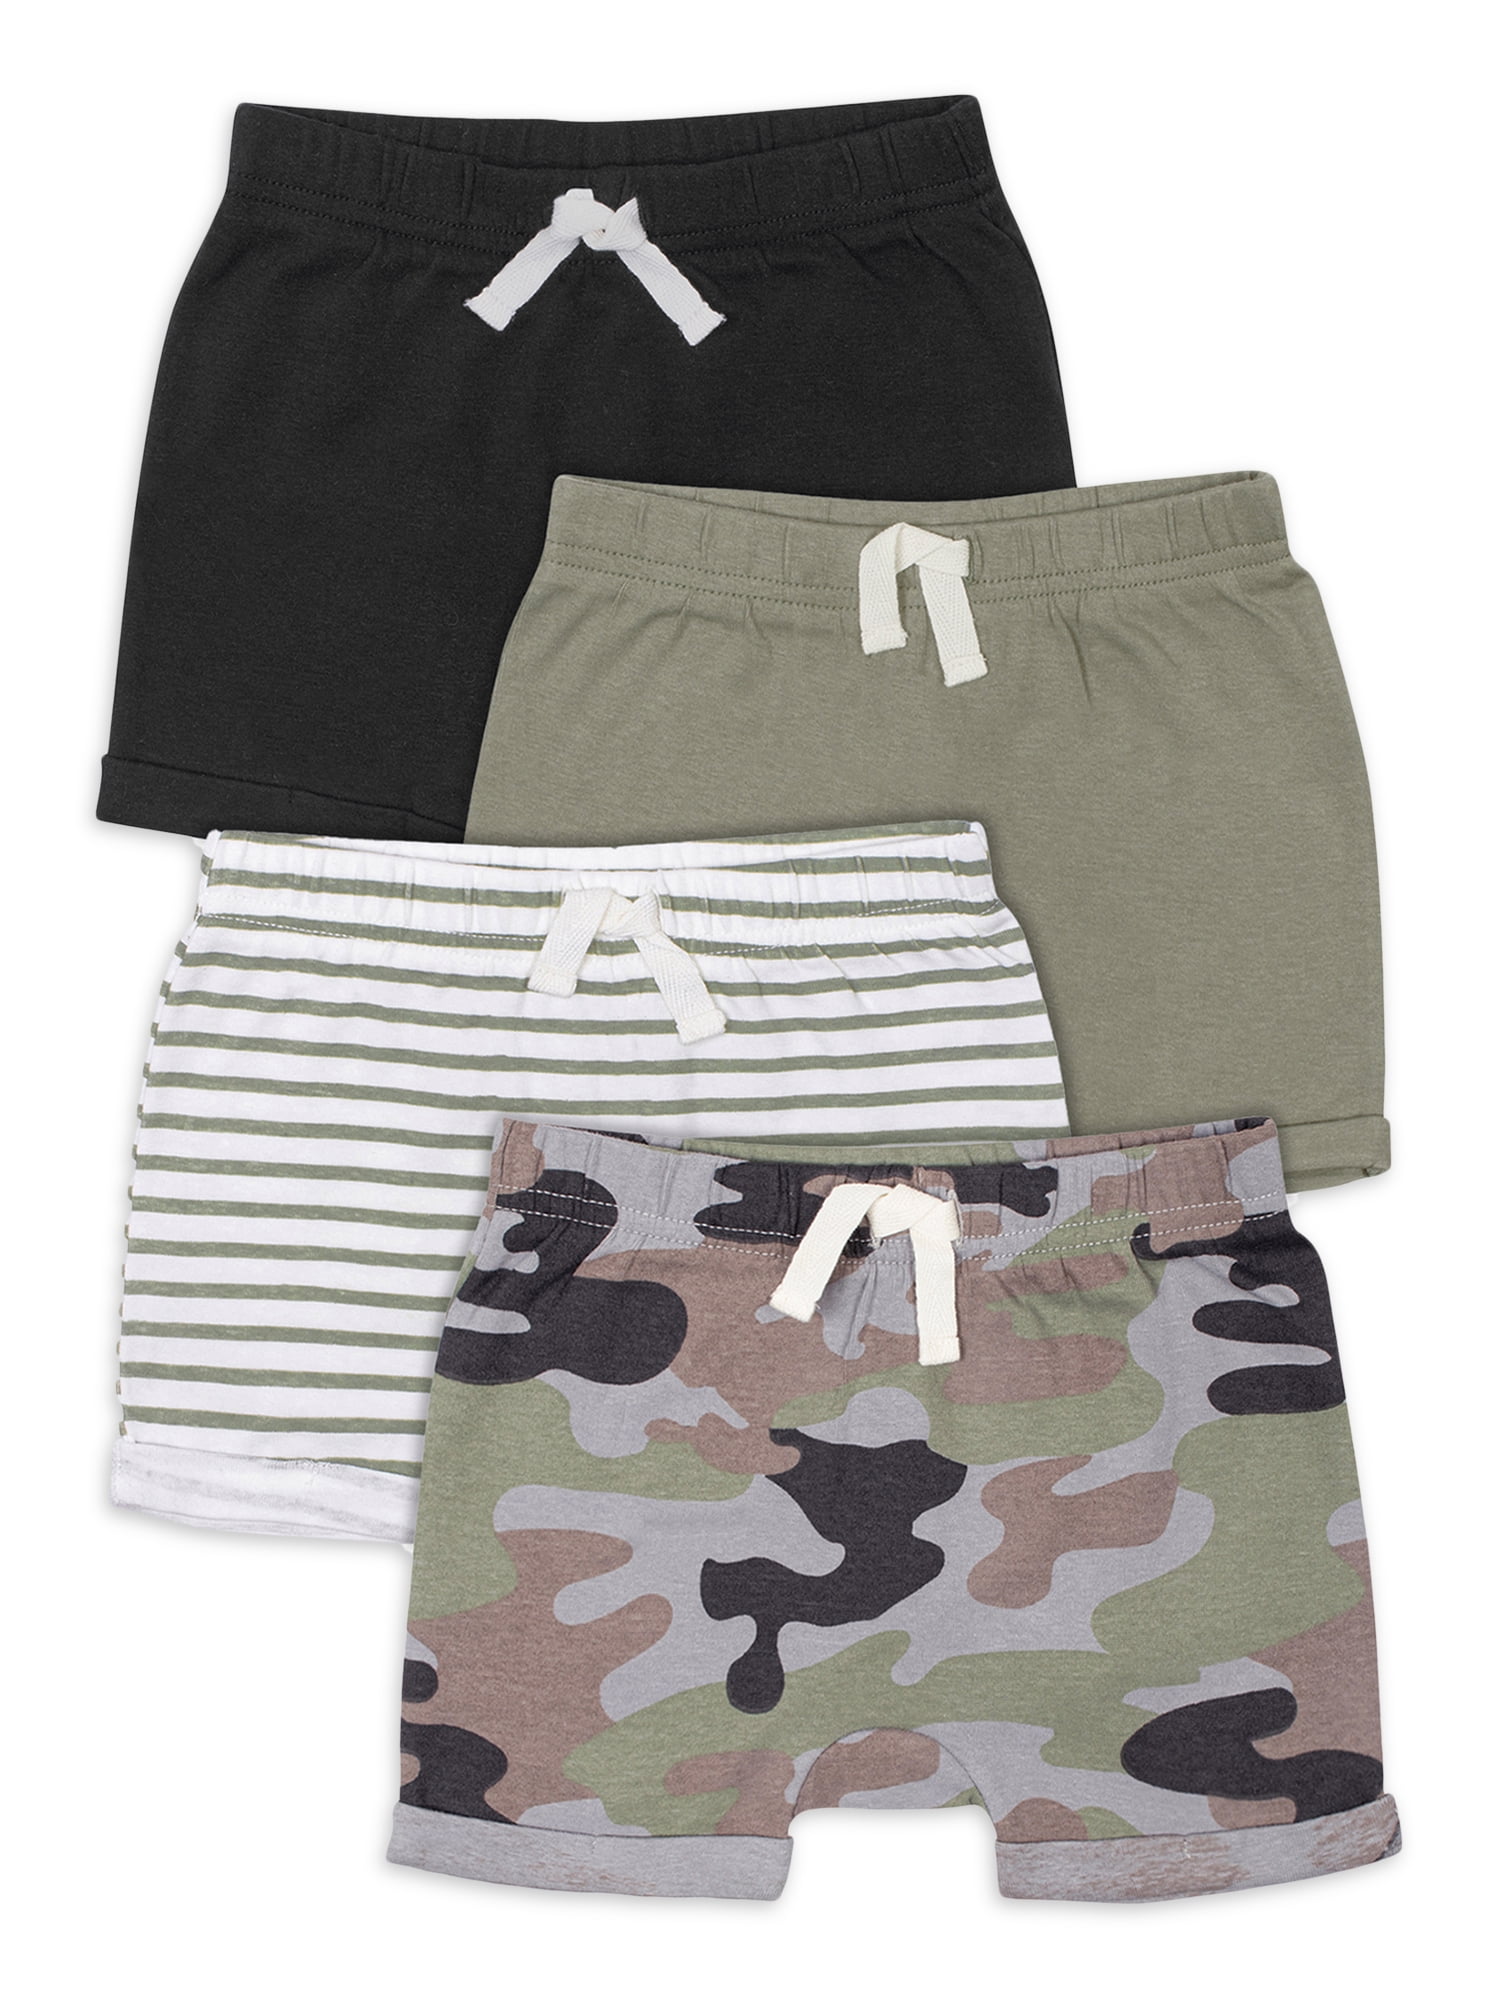 HUAER& Baby Boys Summer Knit Shorts 2 Pack 